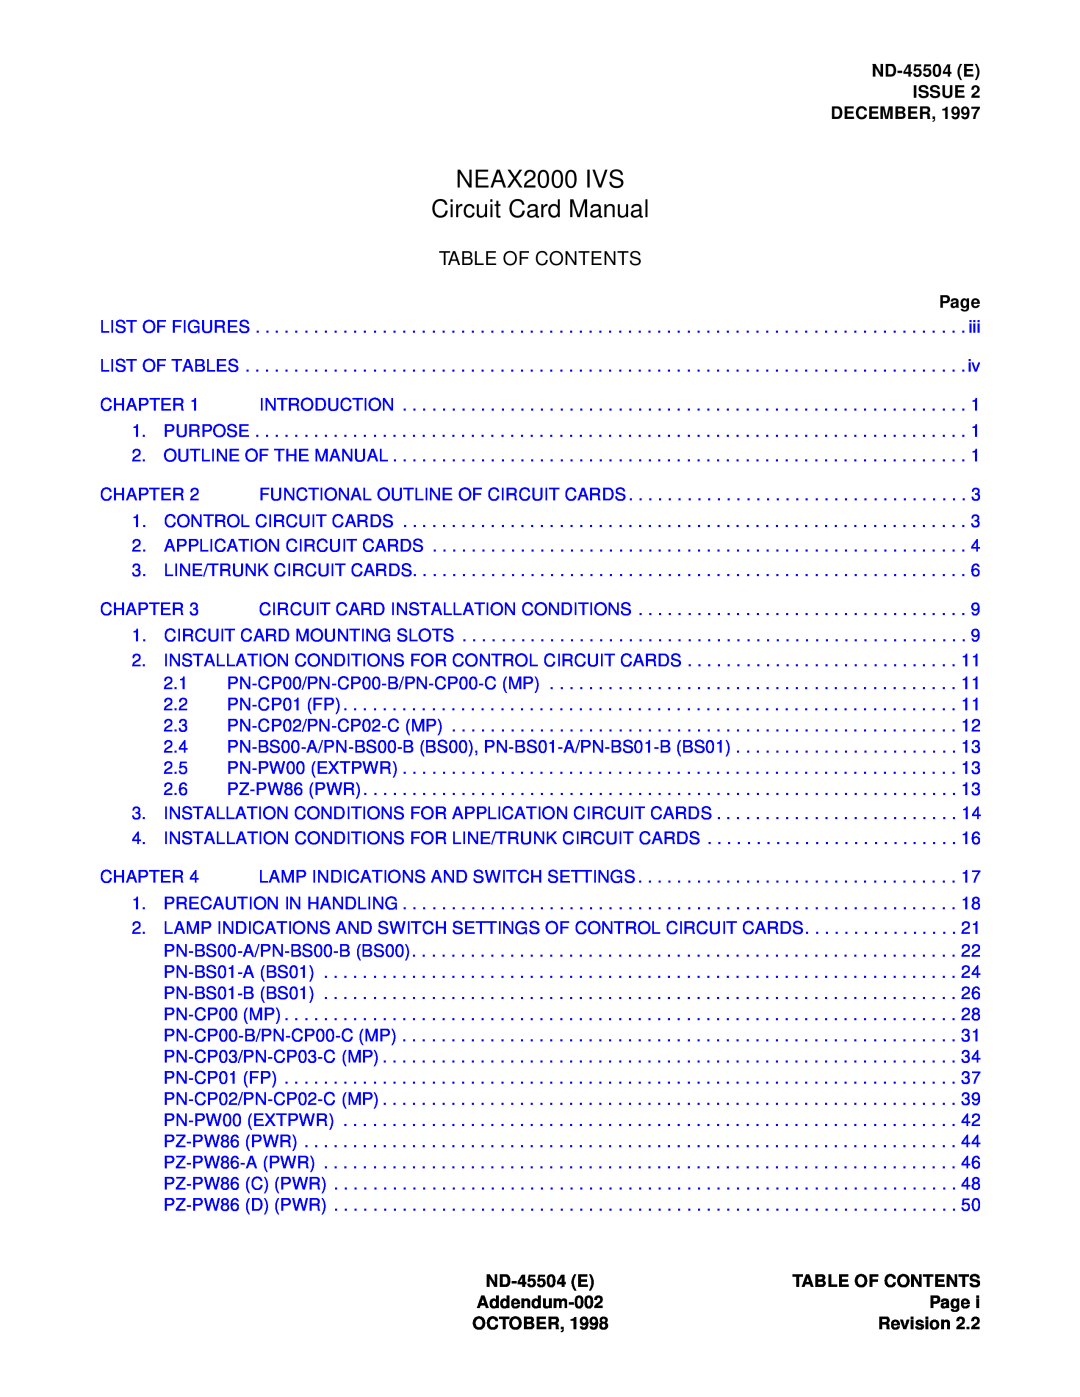 NEC manual Table Of Contents, NEAX2000 IVS Circuit Card Manual 